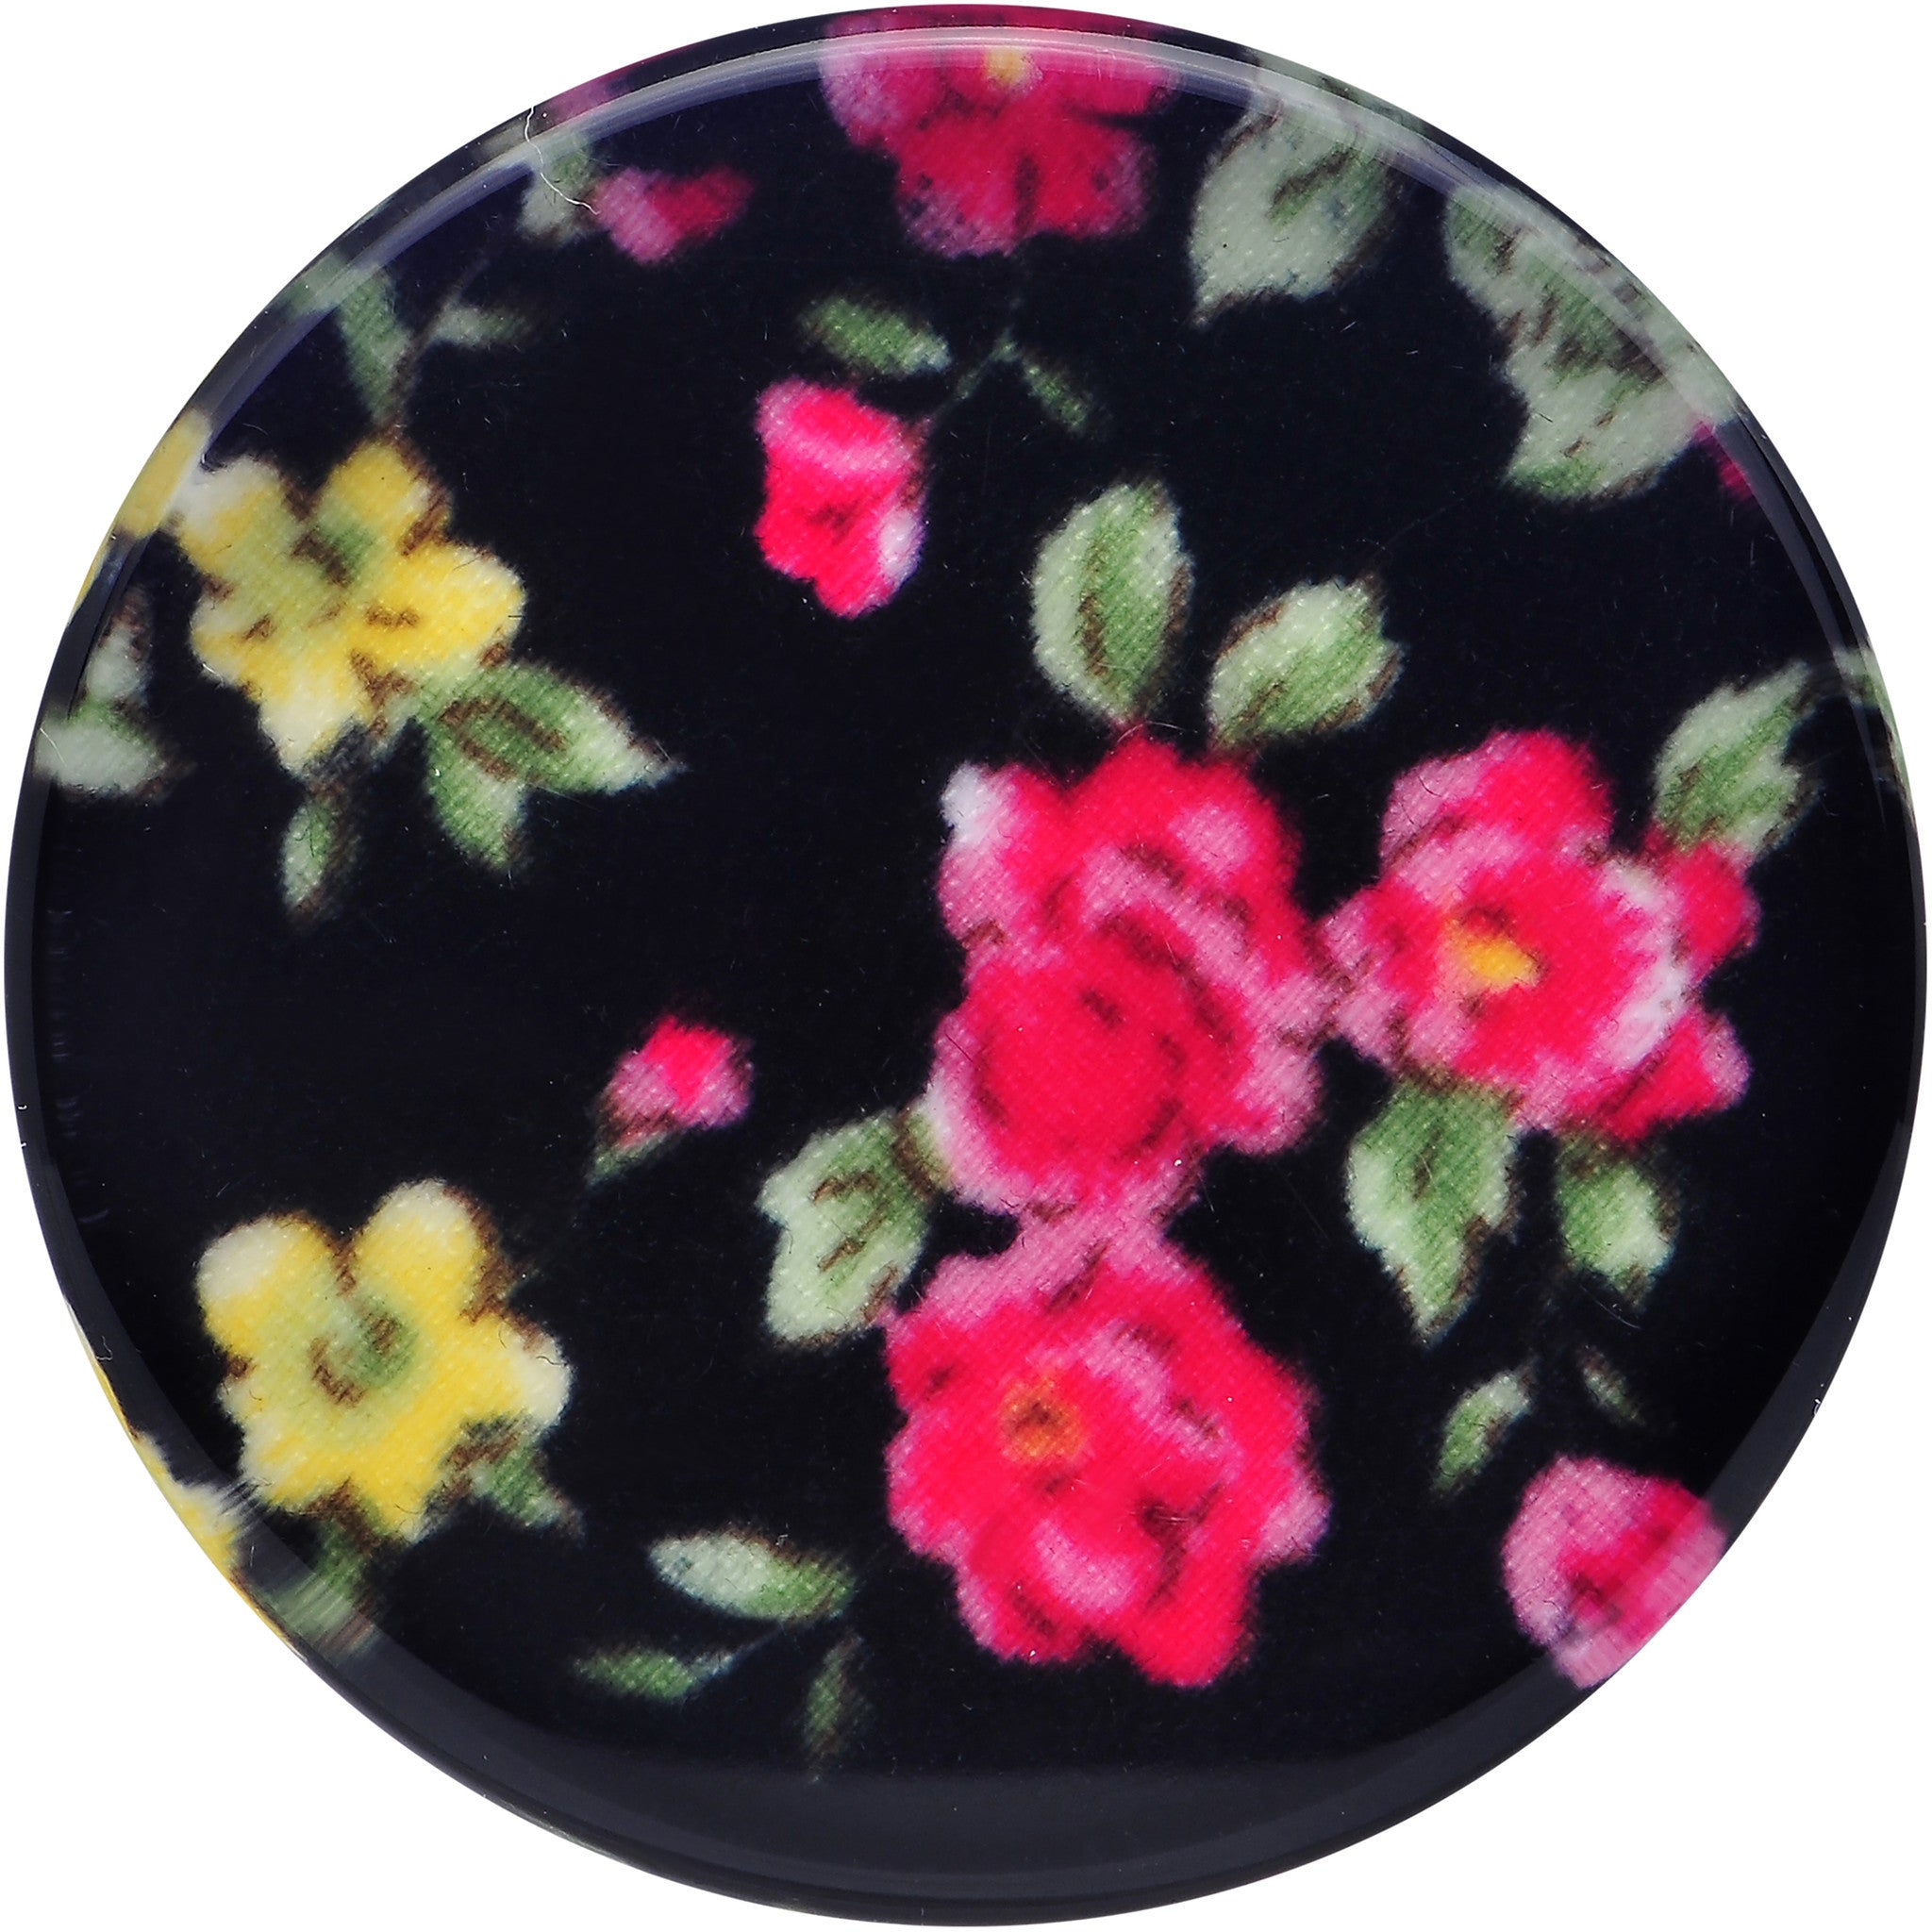 26mm Acrylic Black Multicolored Old Fashioned Flowers Saddle Plug